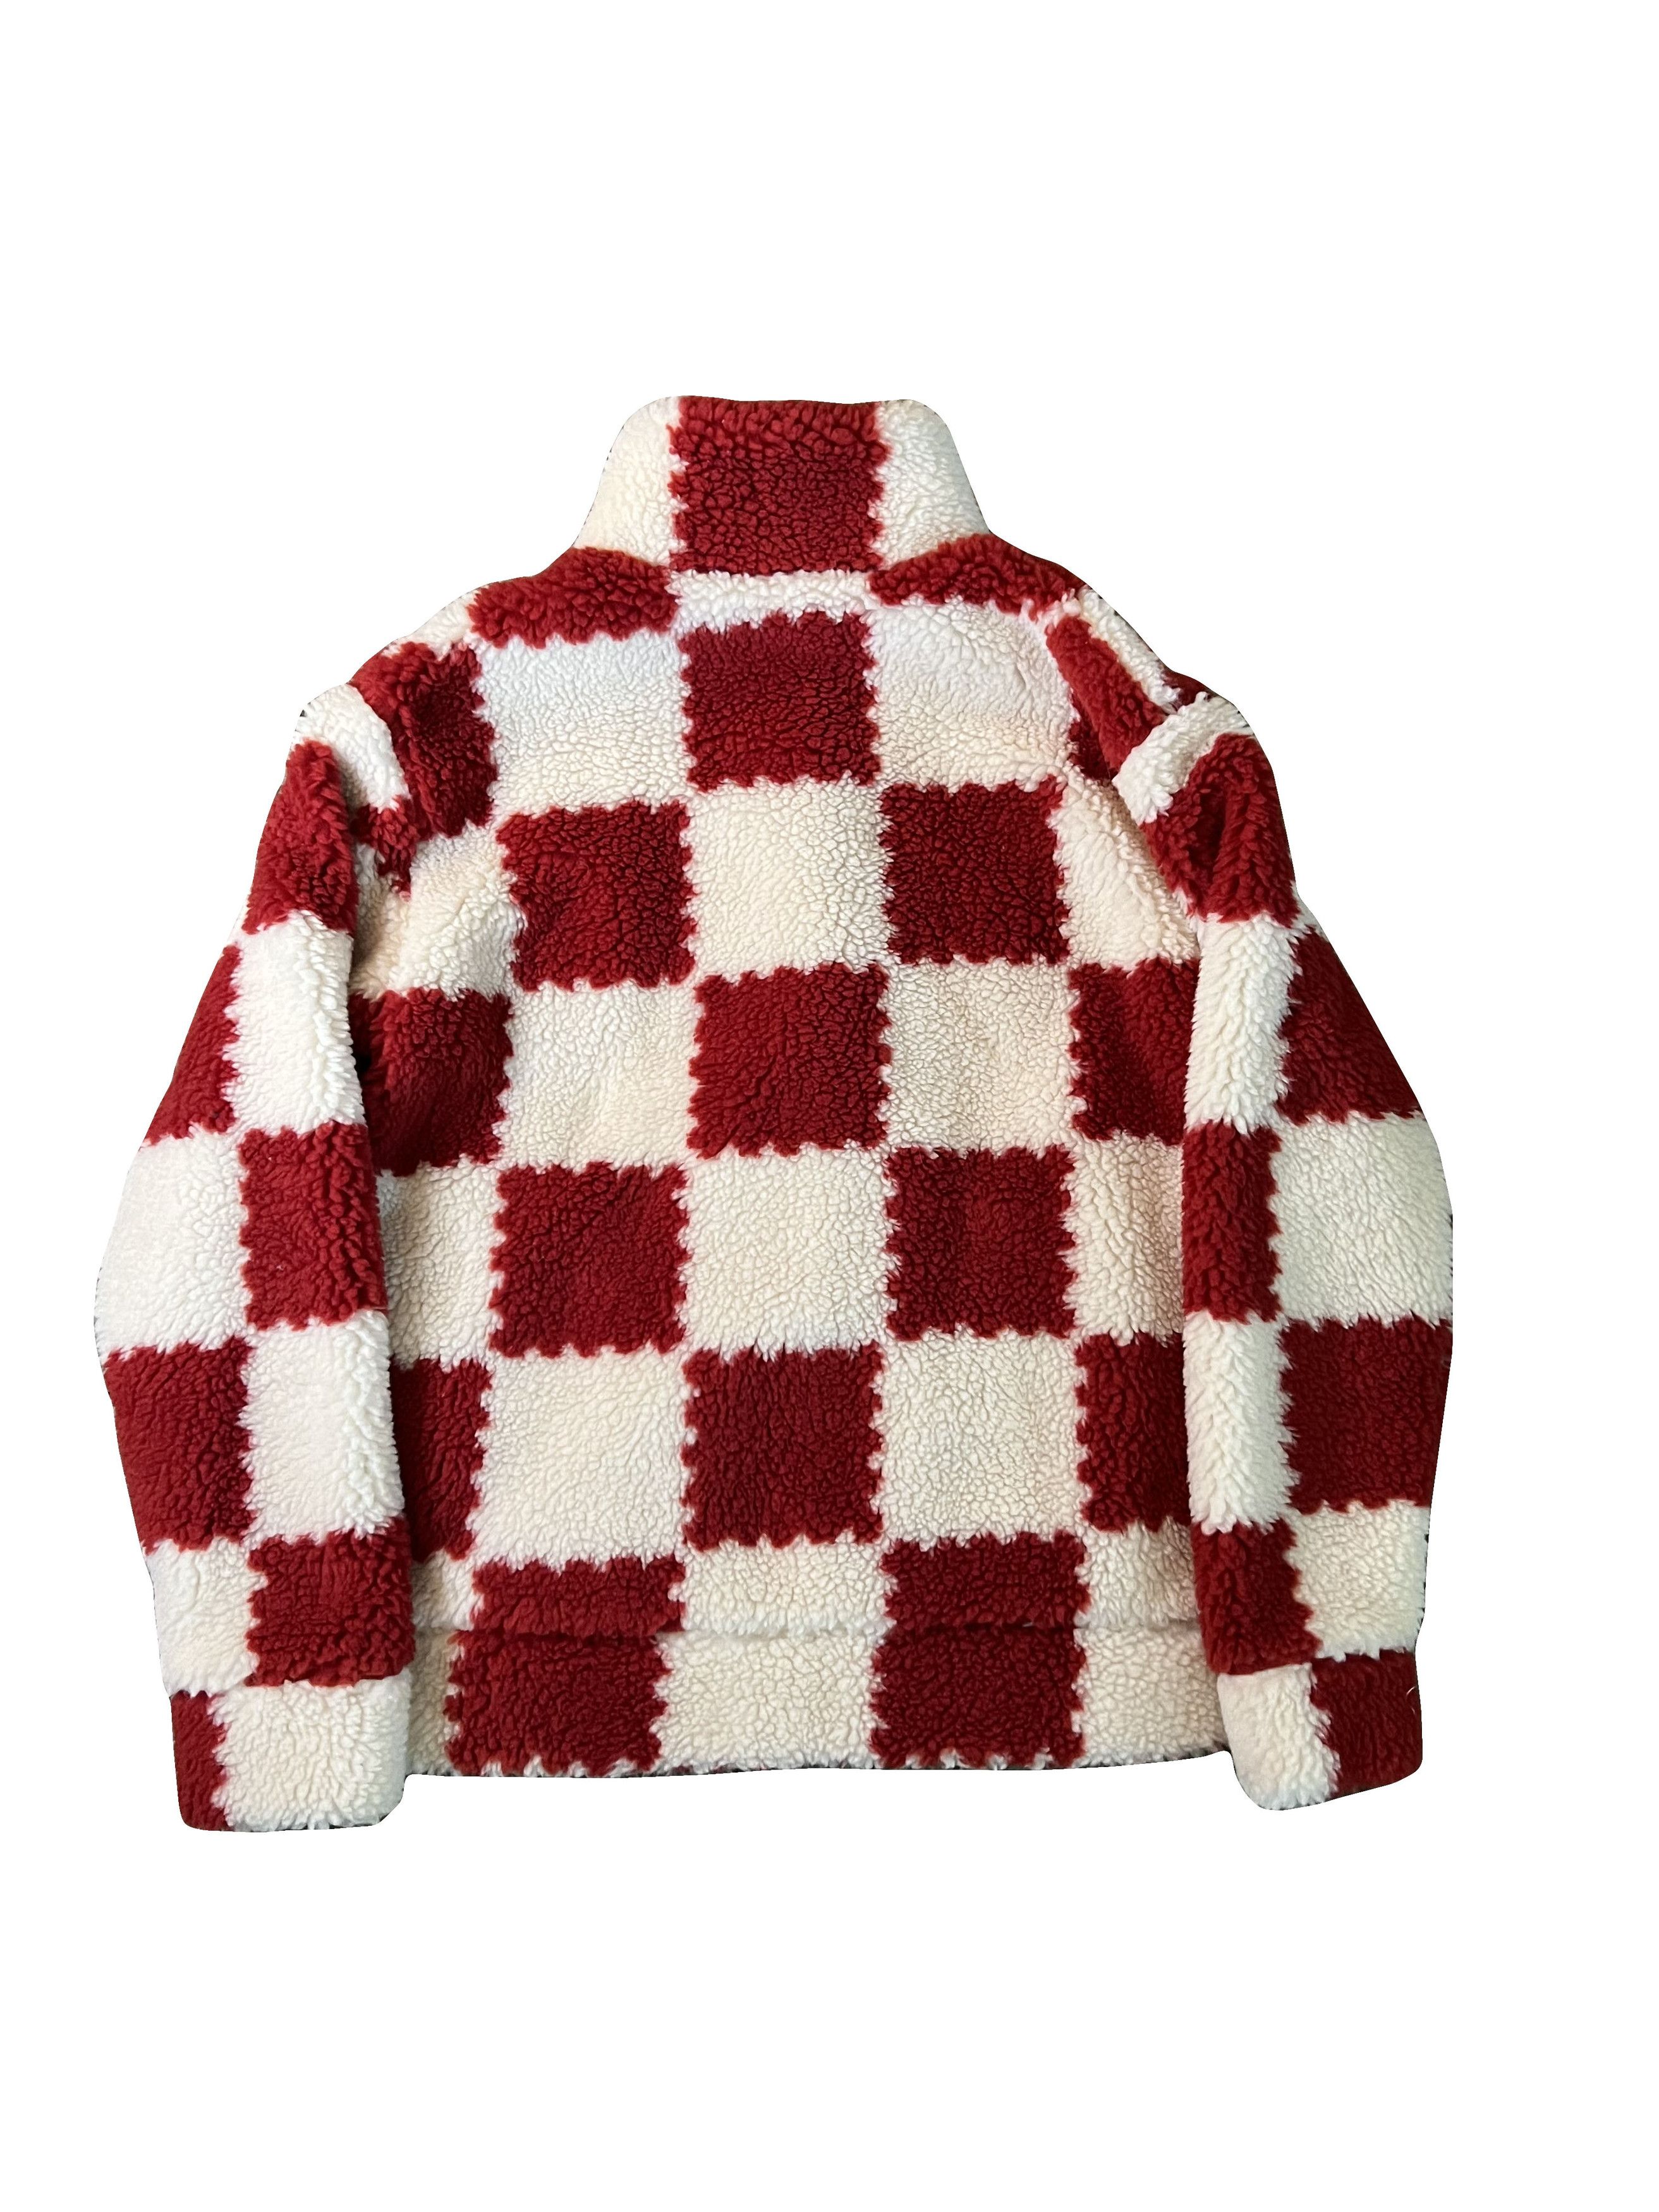 Louis Vuitton Louis Vuitton Nigo Red Checkered Fleece Jacket Size US M / EU 48-50 / 2 - 5 Thumbnail